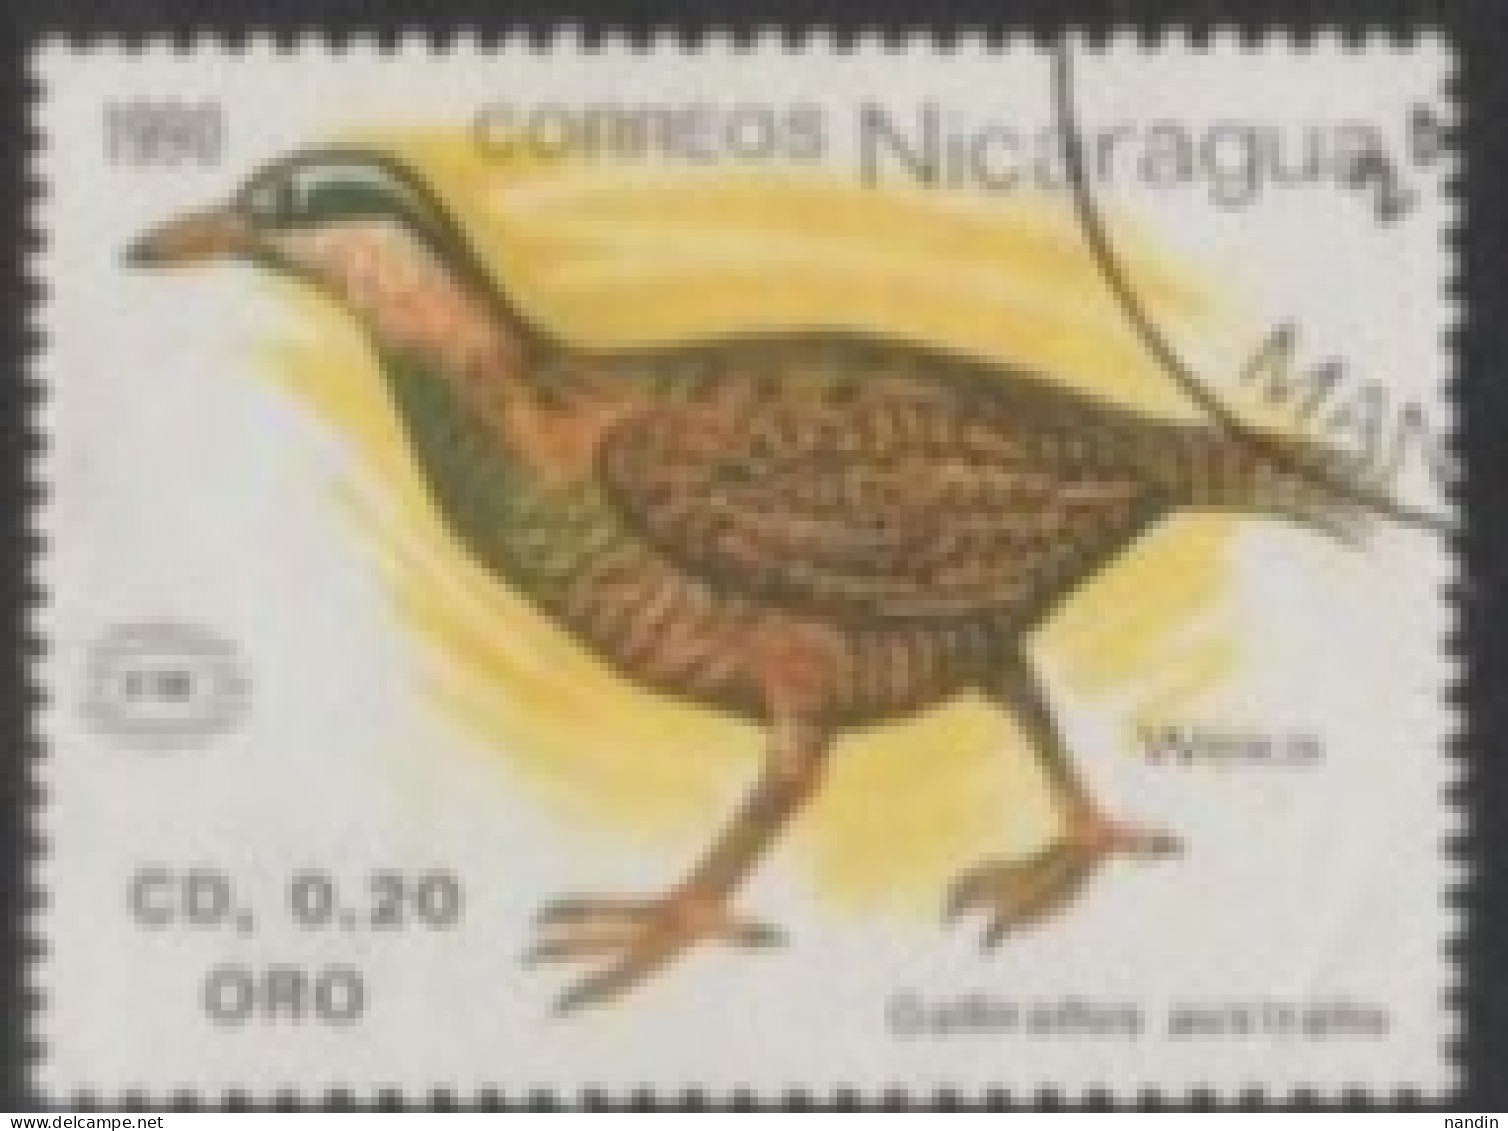 1990 NICARAGUA USED STAMP ON BIRDS/Gallirallus Australis-Genus Of Rails/Int. Stamp Exhibition "NEW ZEALAND '90" BIRD - Colibríes